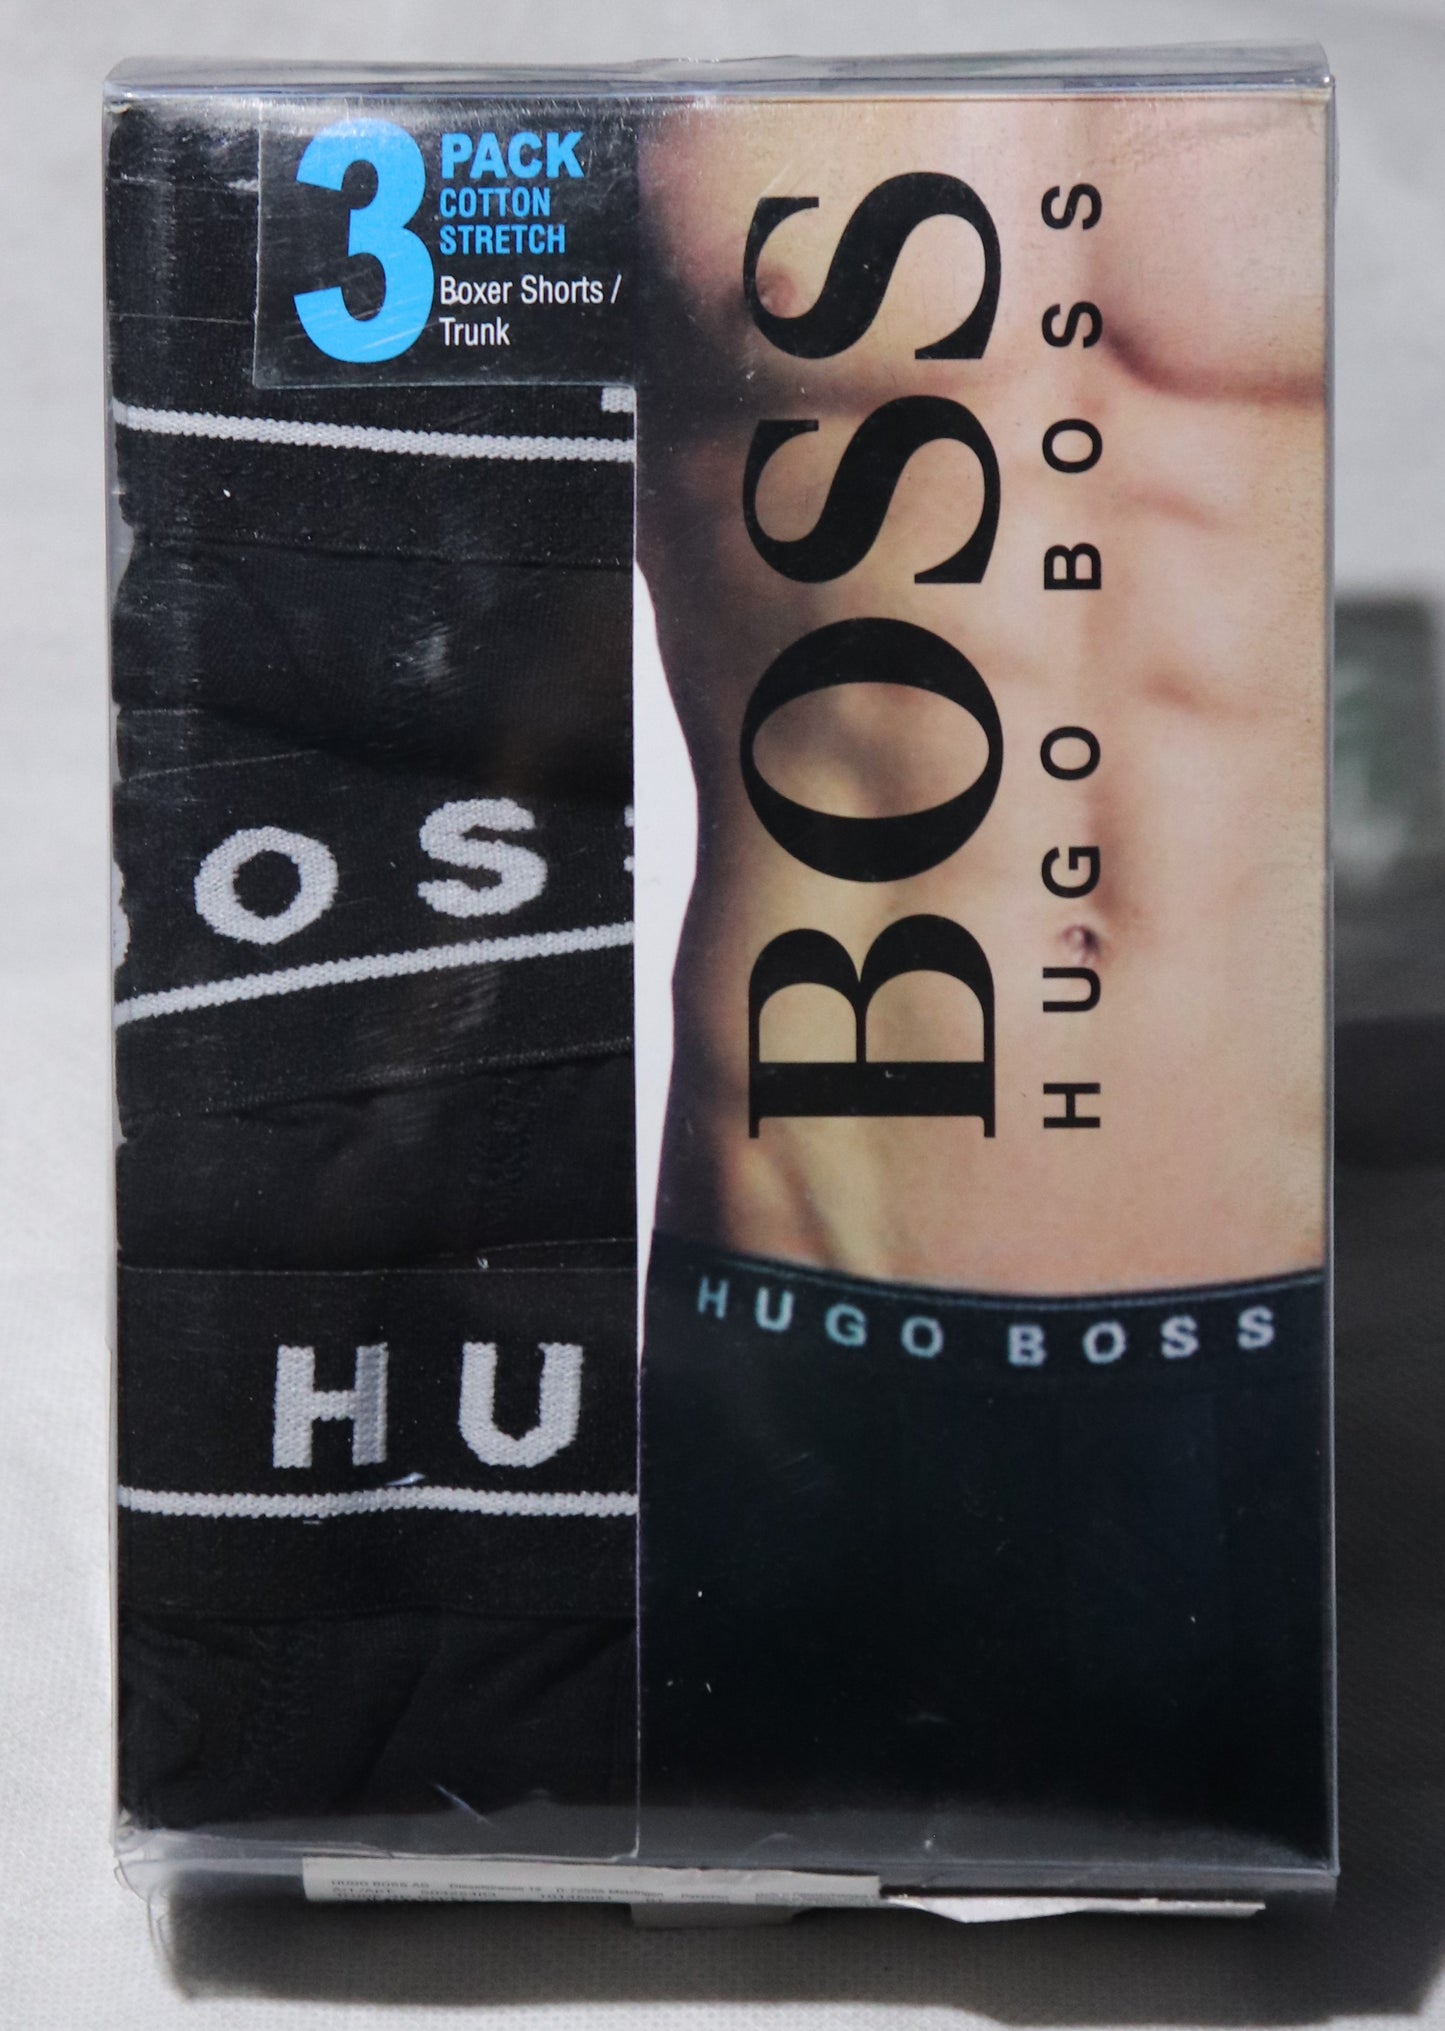 BB002-HGOBSS ALL BLACK PACK OF 3 BOXER BRIEFS